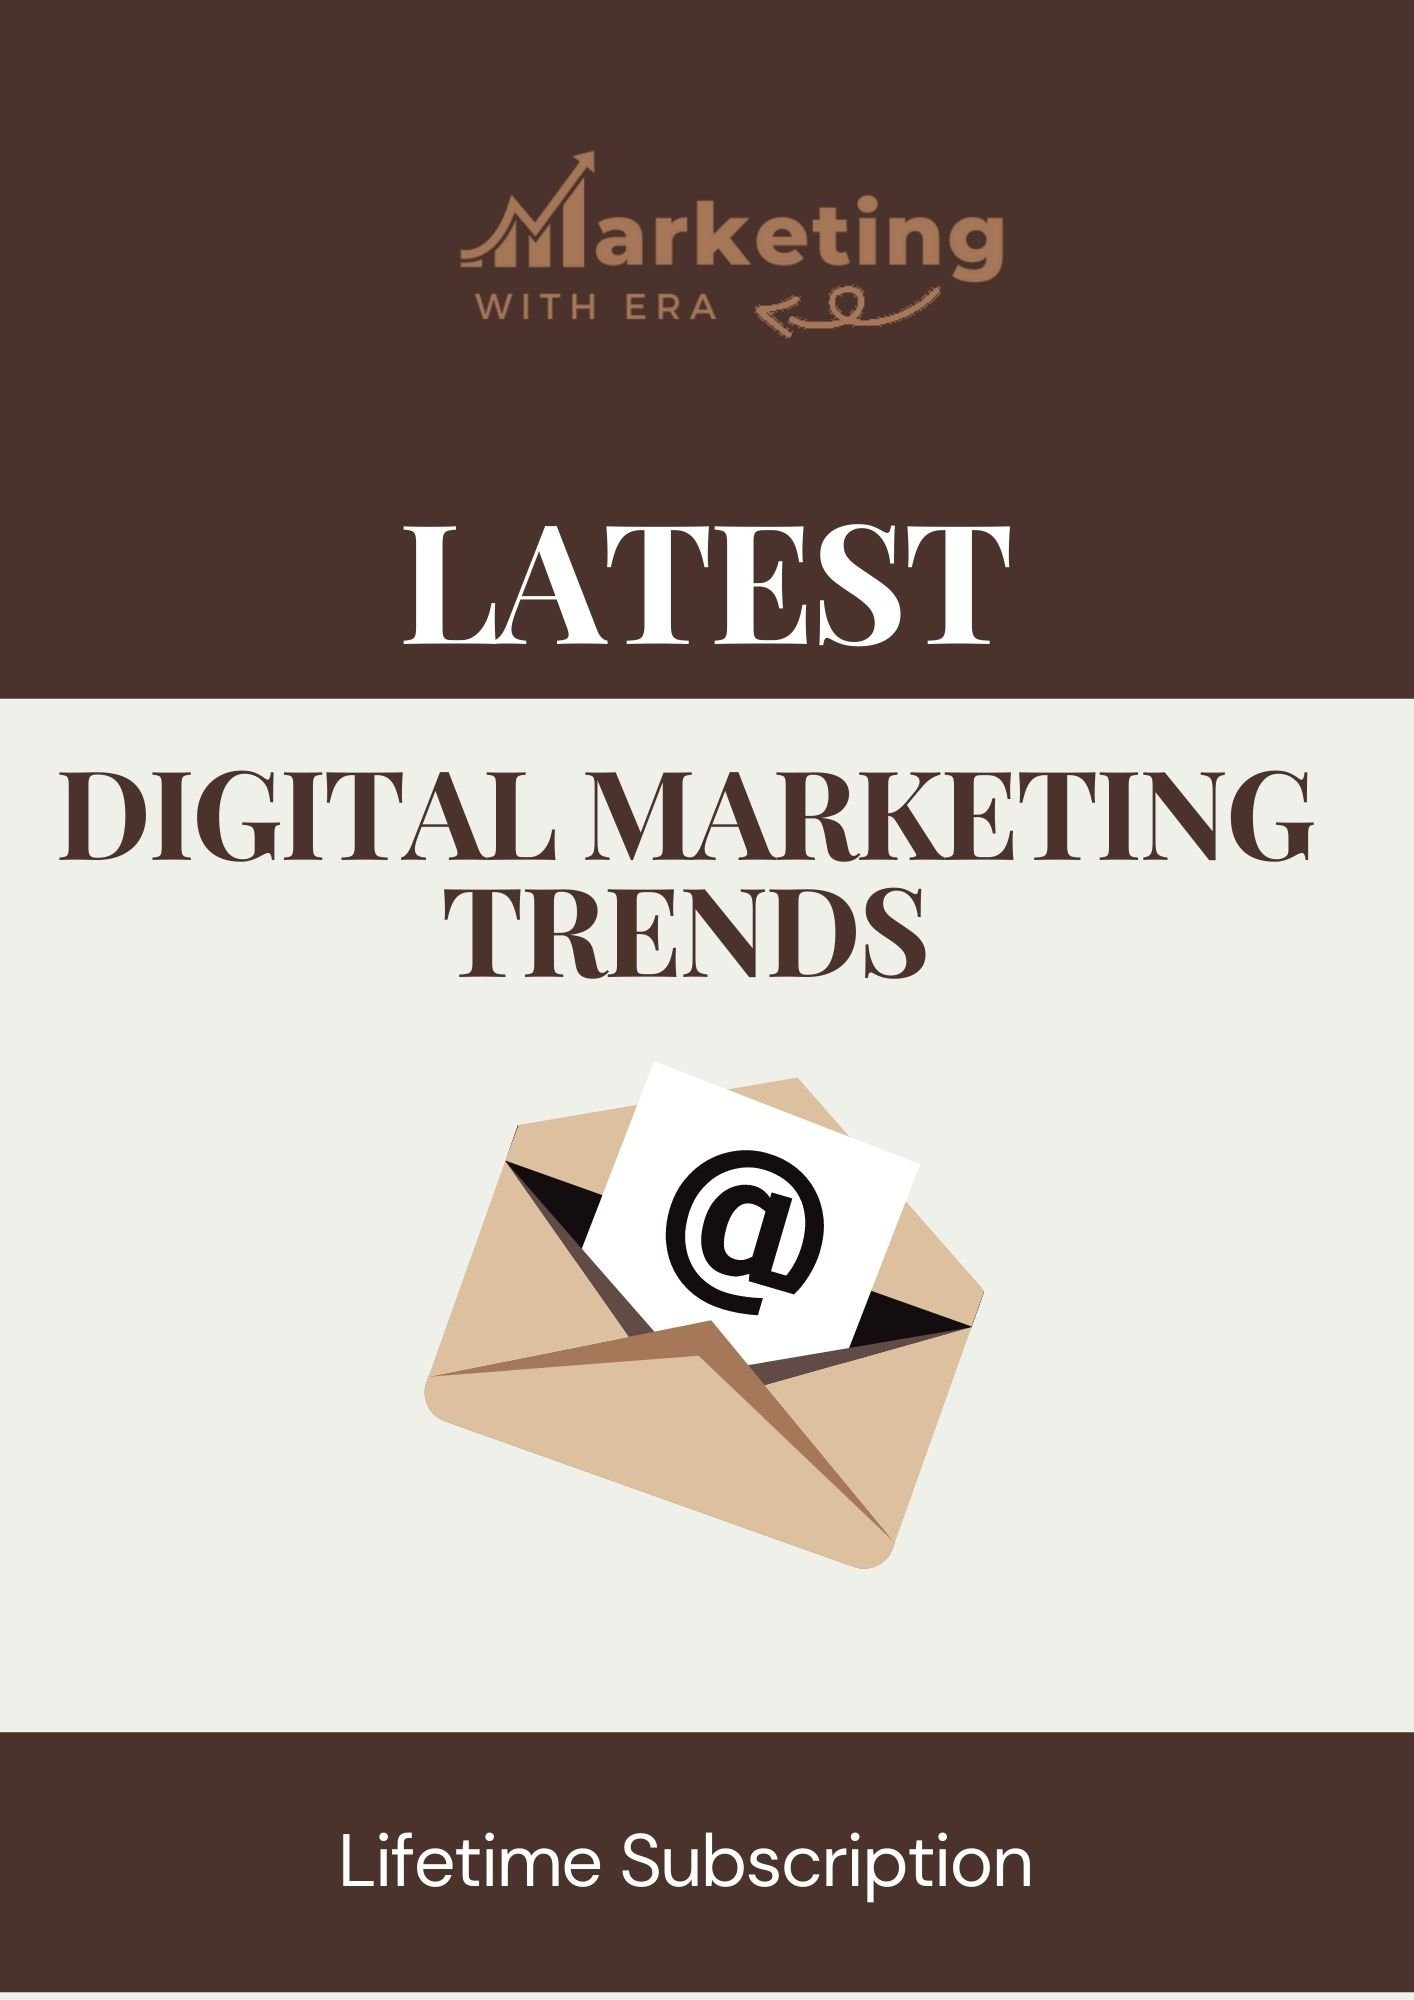 digital marketing newsletter